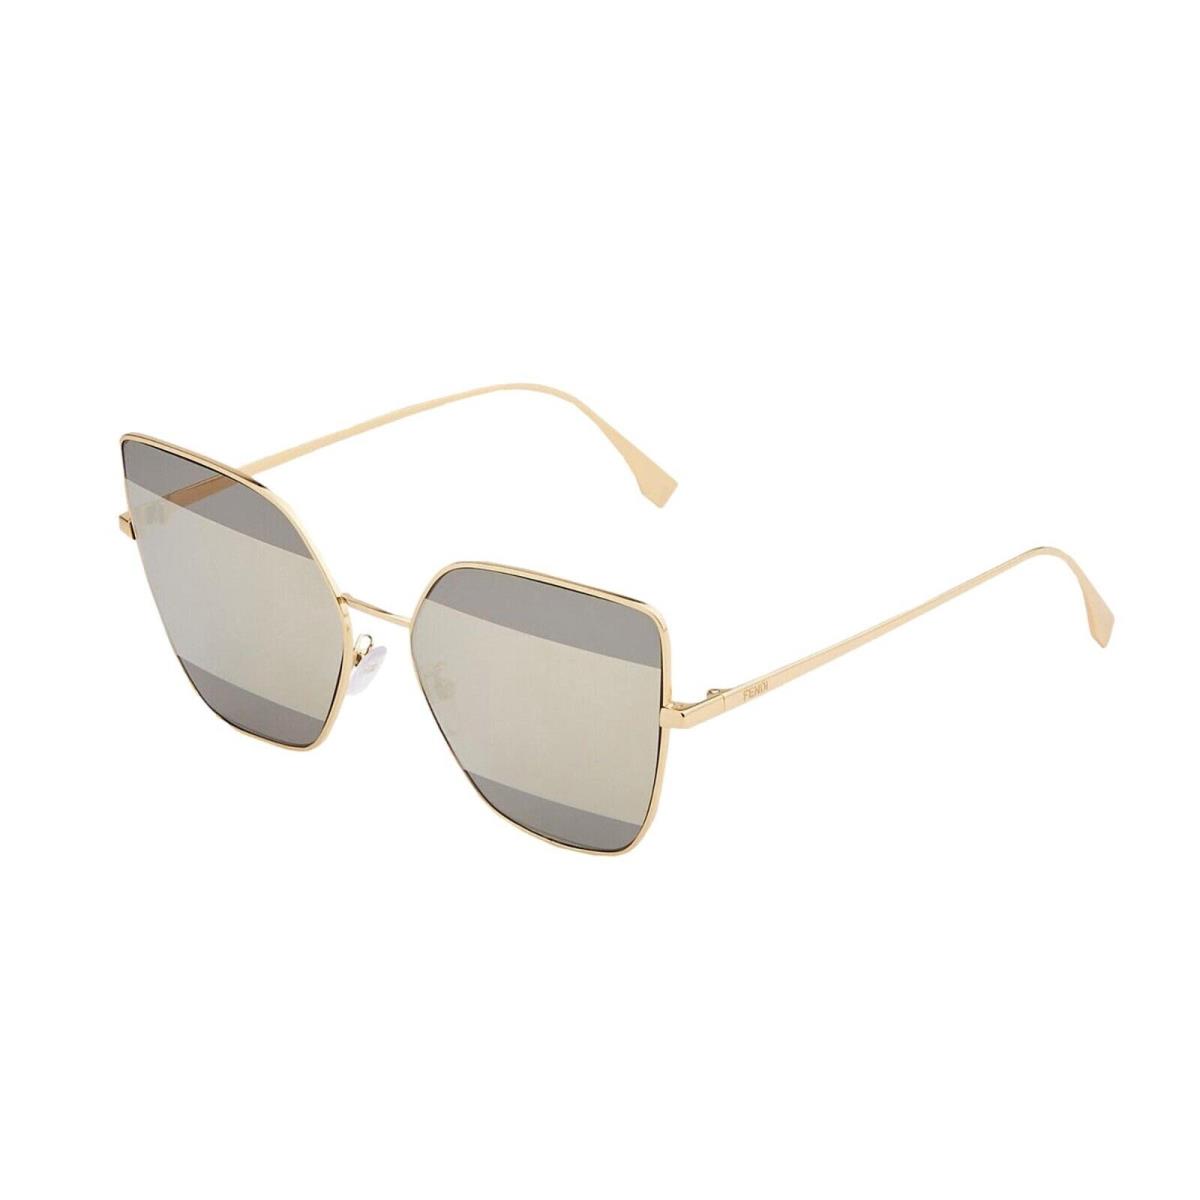 Fendi Stripes Silver Tint and Gold Frame Metal Sunglasses FOL009